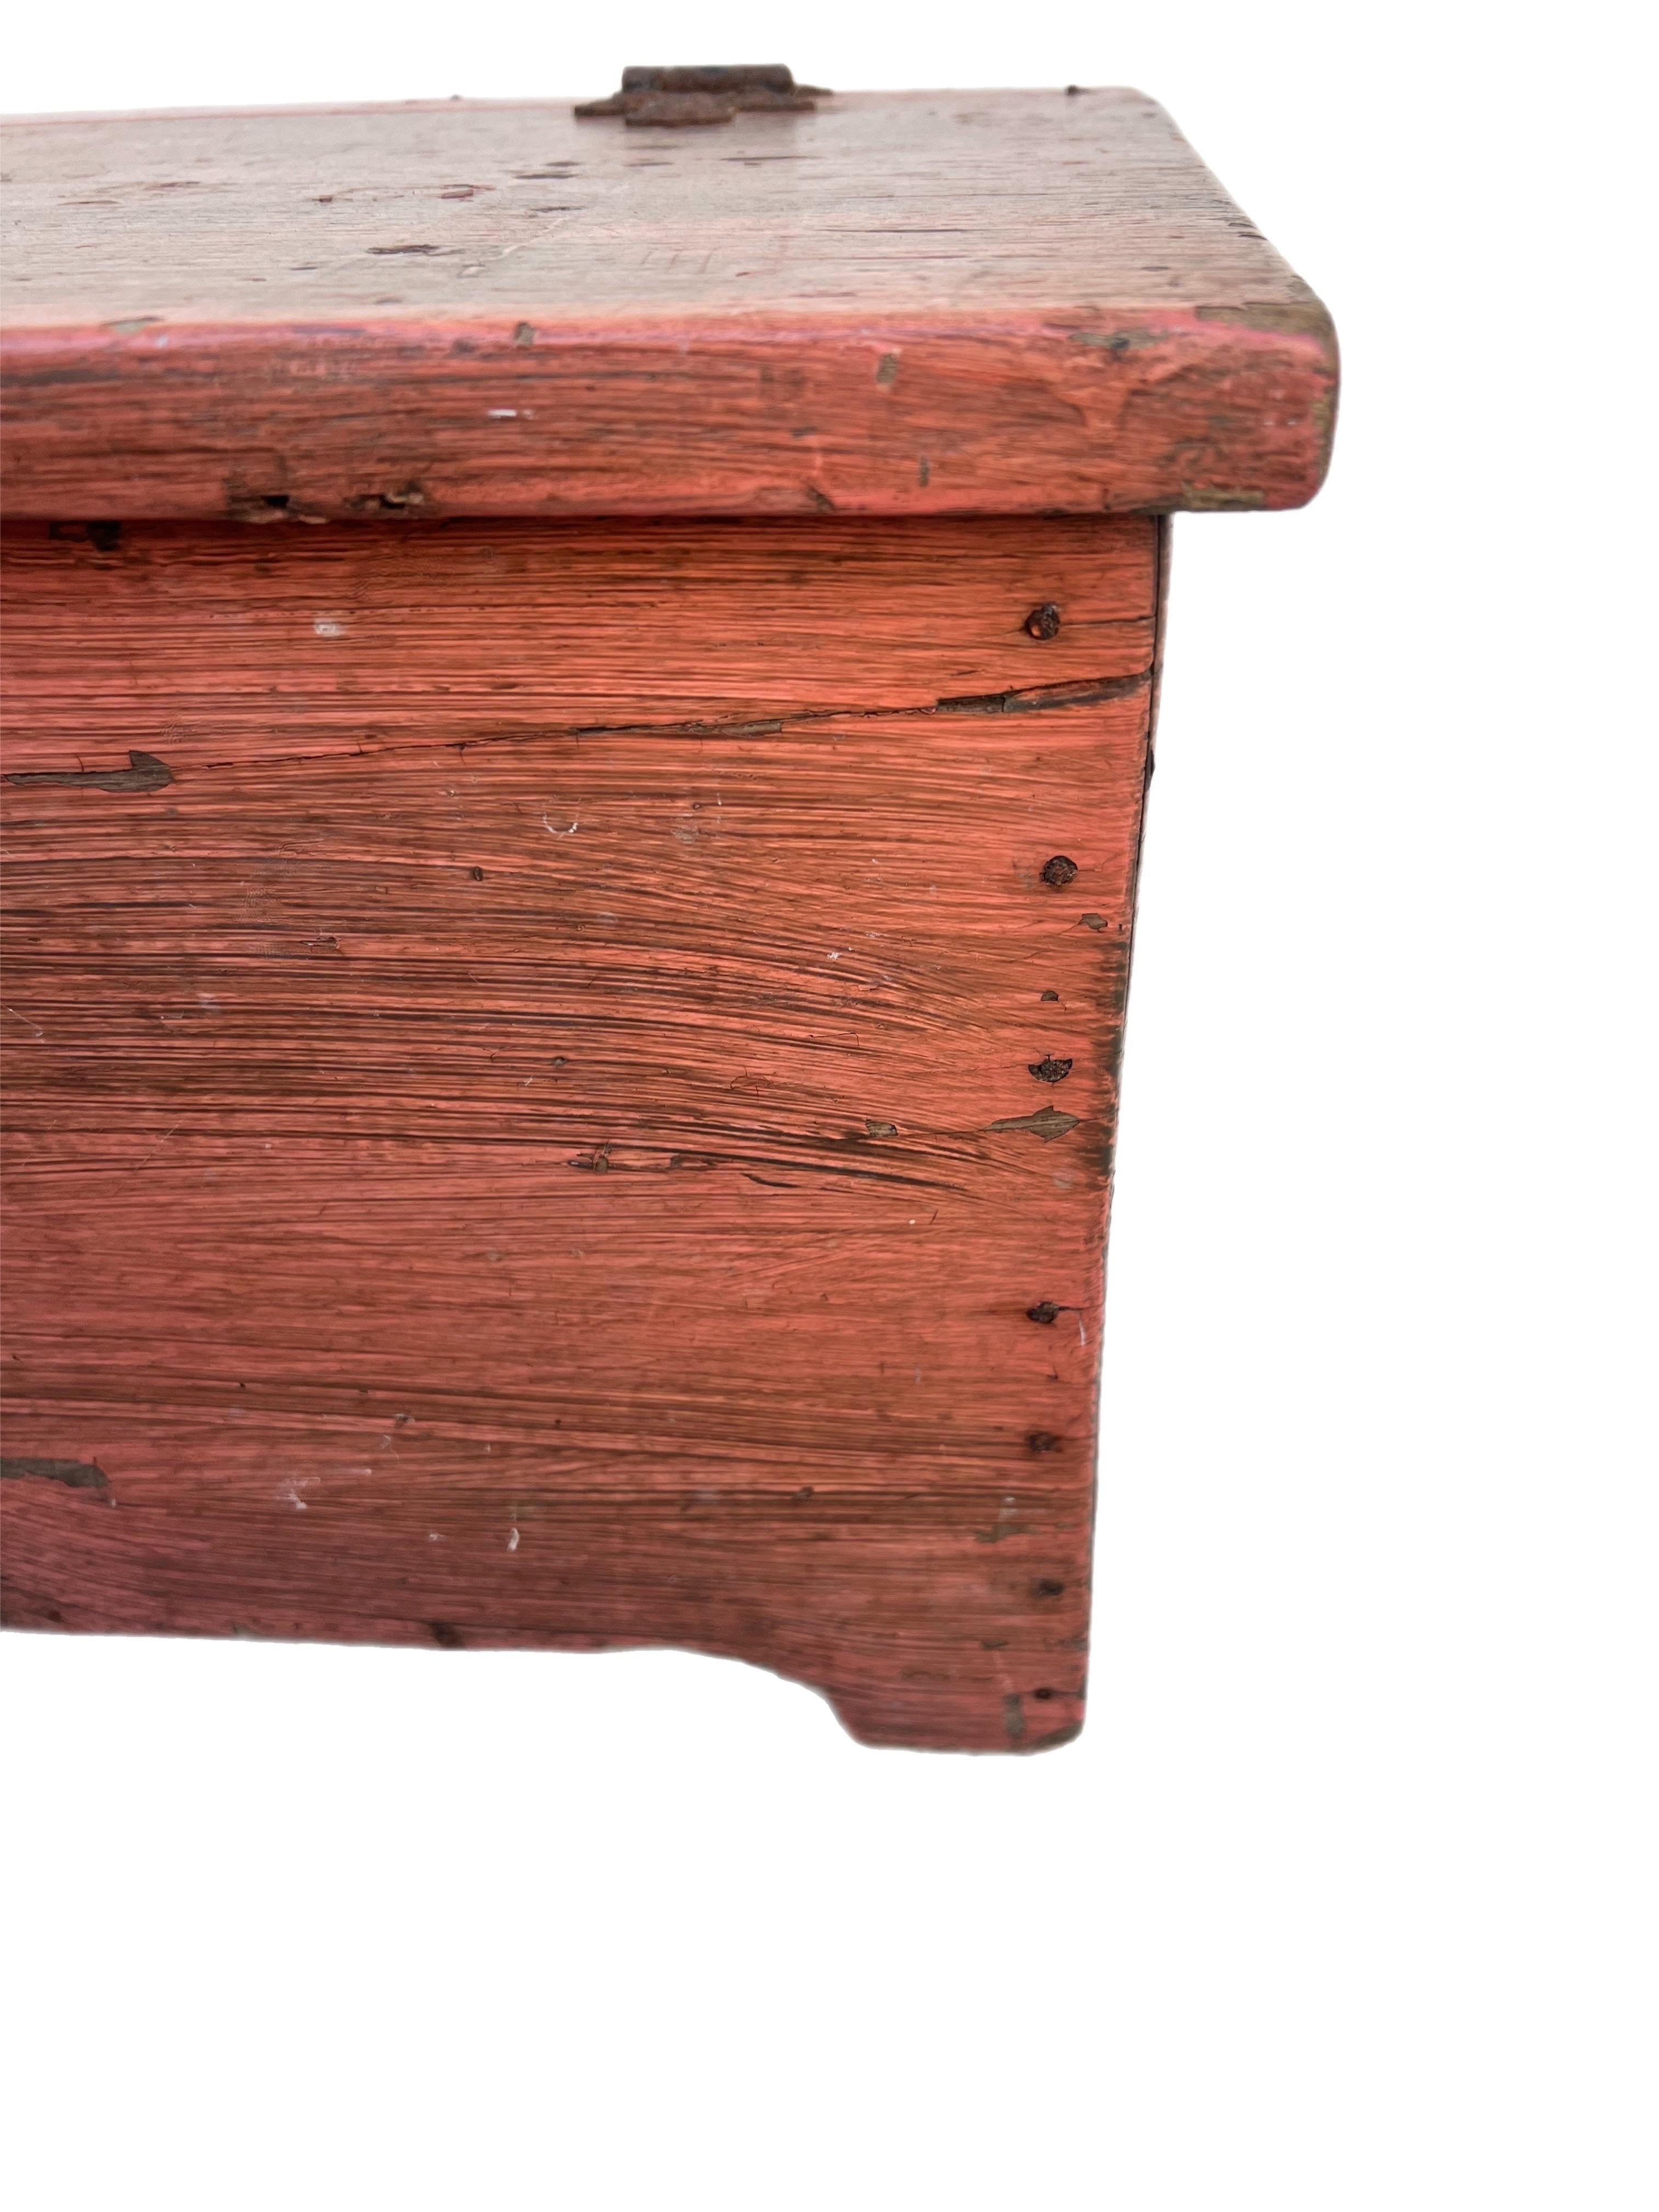 Iron Antique 19th Century Primitive Painted Pine Petite Chest Storage Trunk For Sale